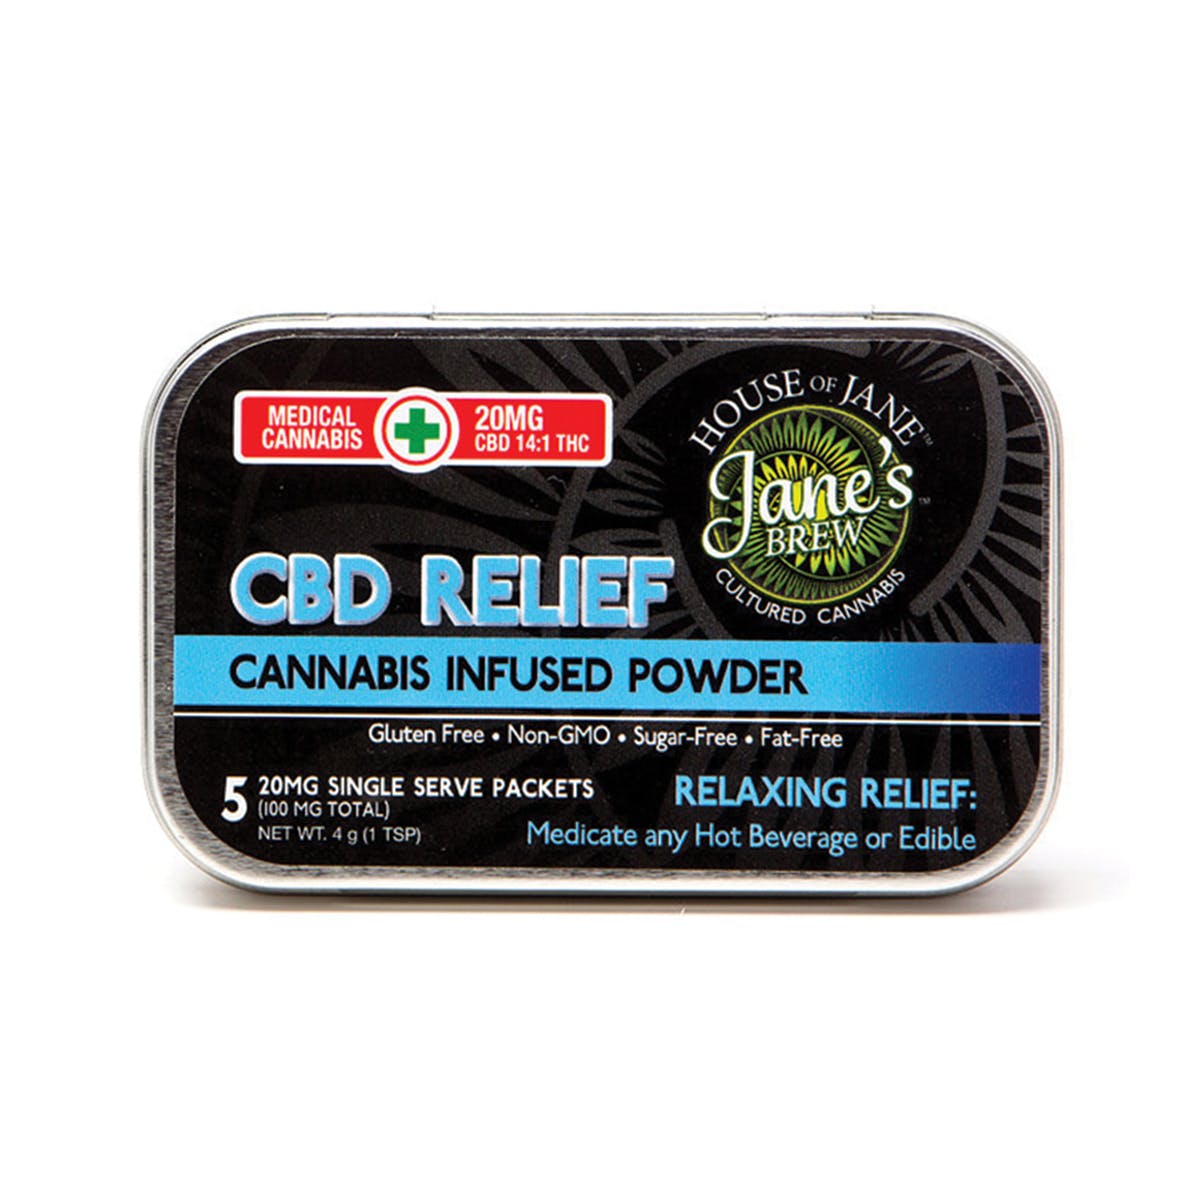 edible-cannabis-infused-powder-2c-cbd-relief-100mg